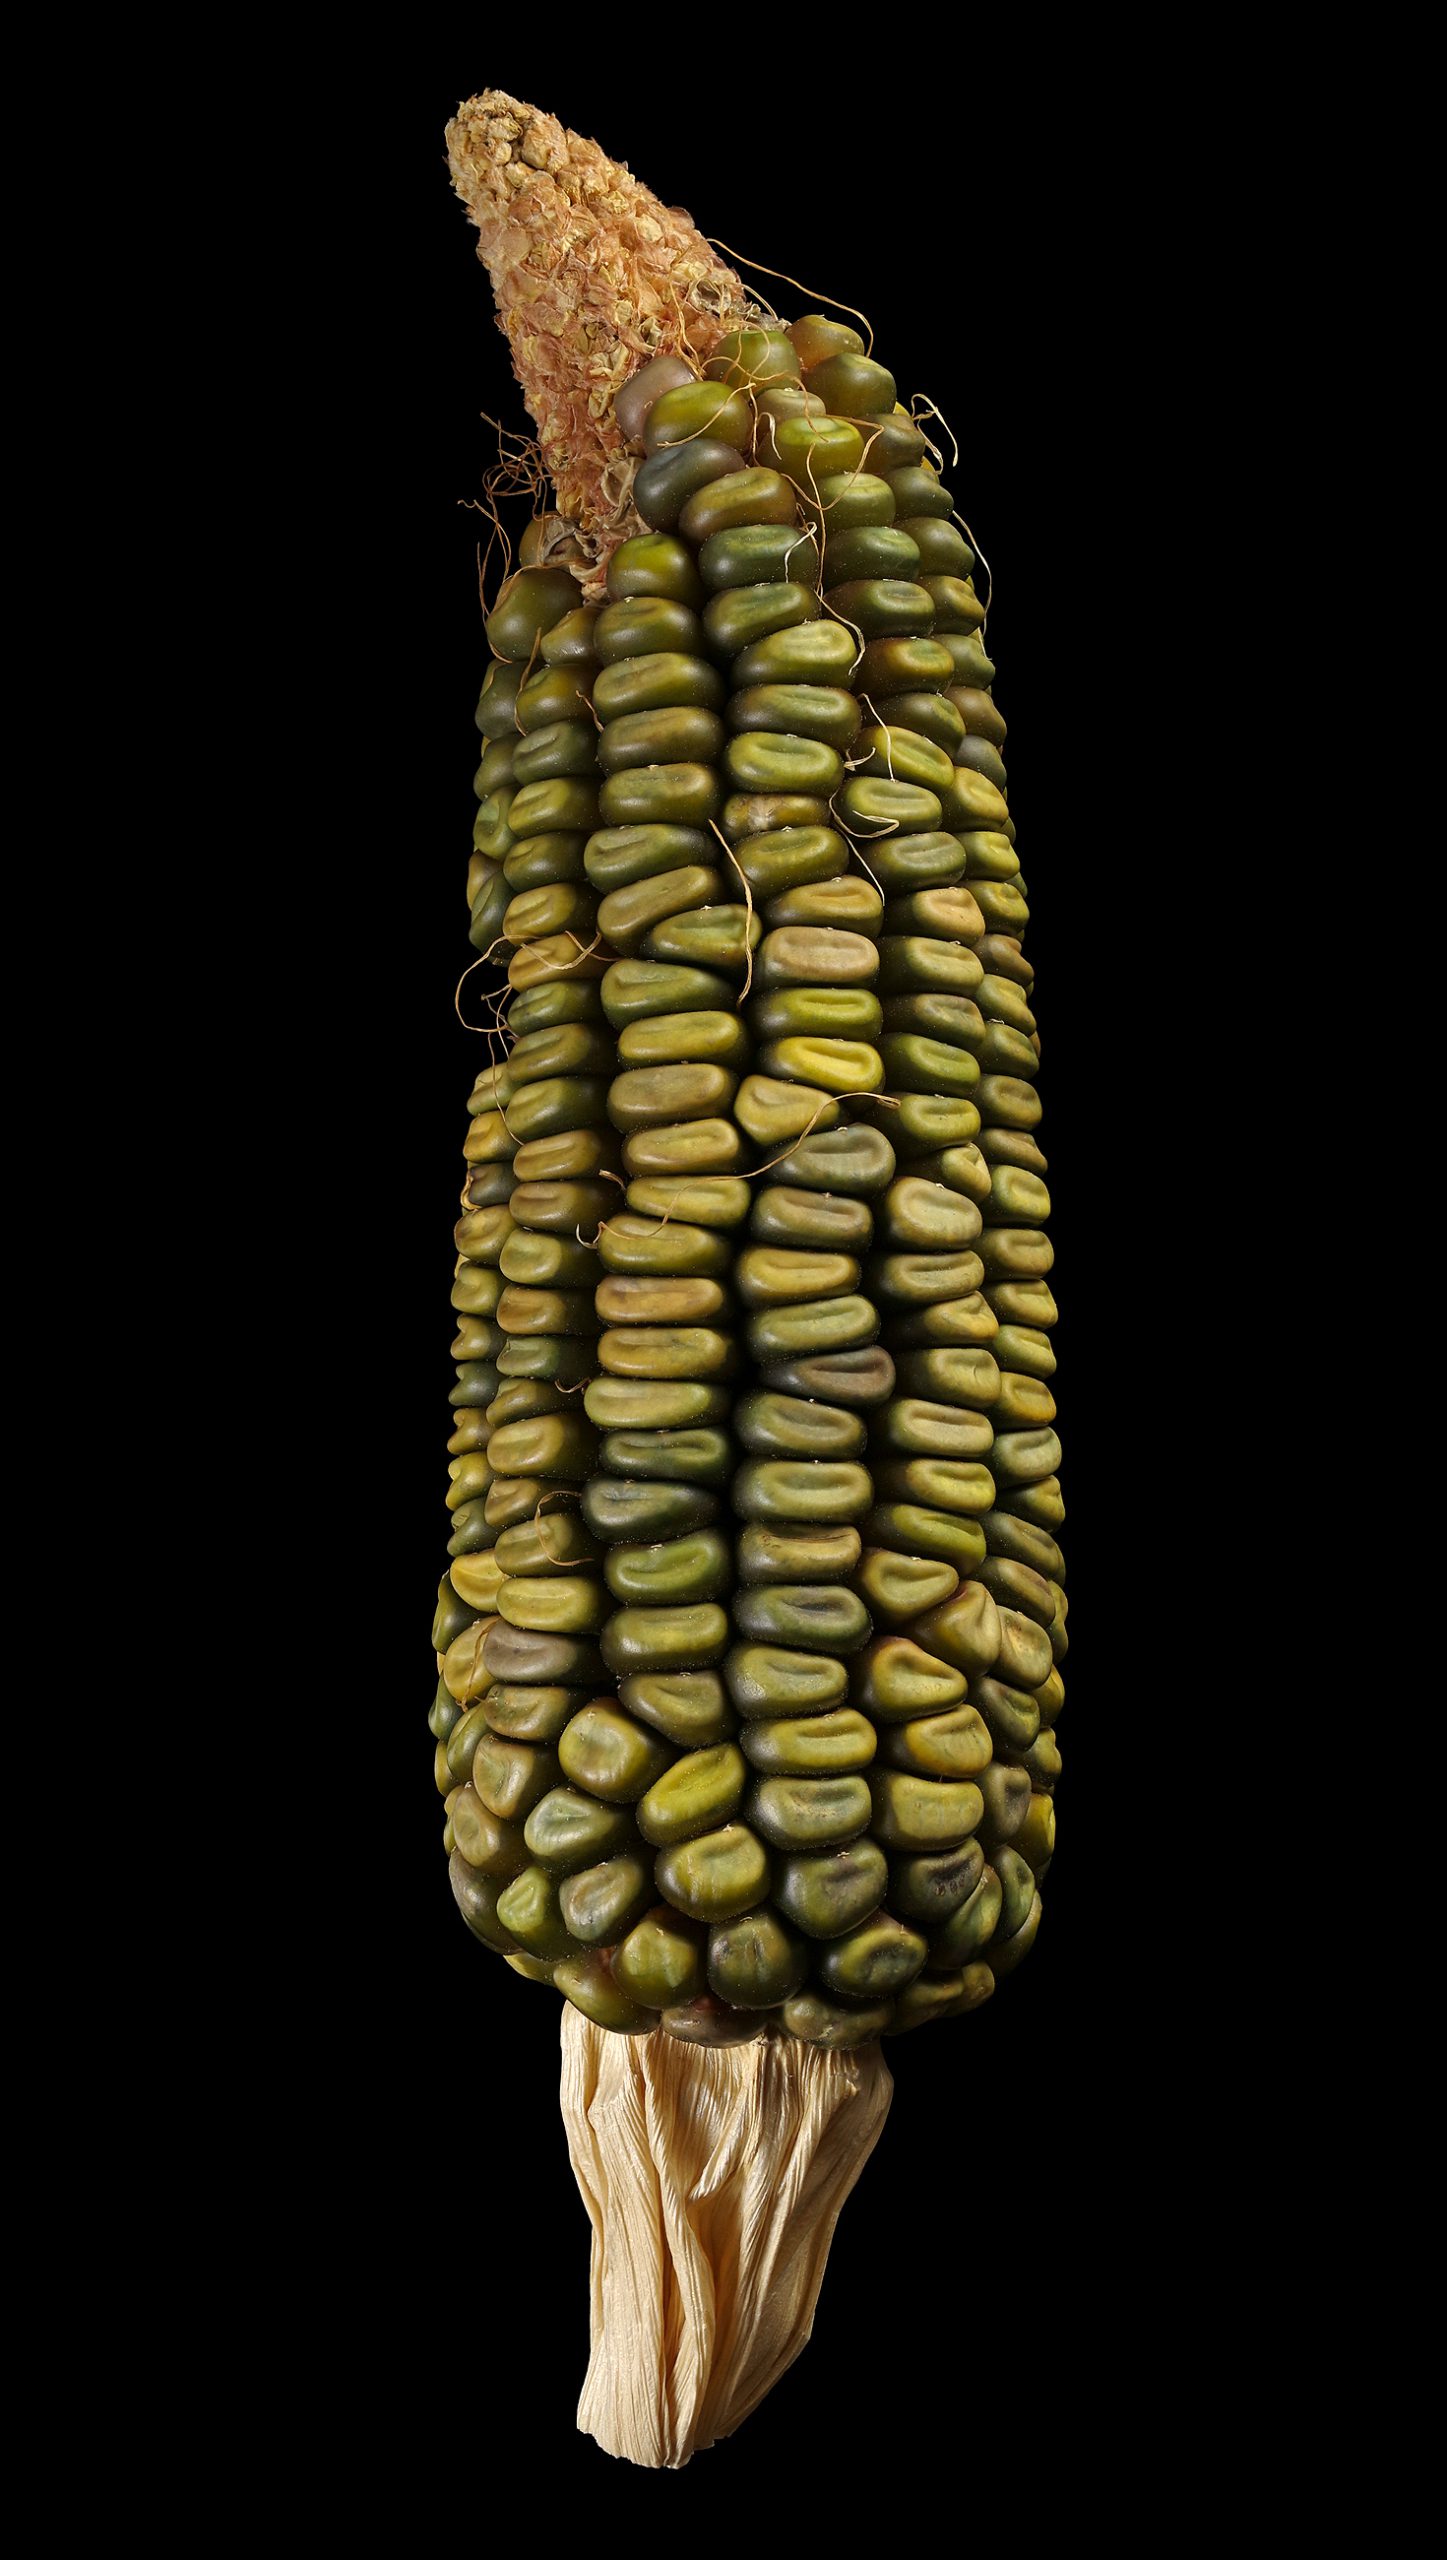 Oaxacan Green dent corn: Zea mays ssp. mays convar. indentata ‚Oaxacan Green‘